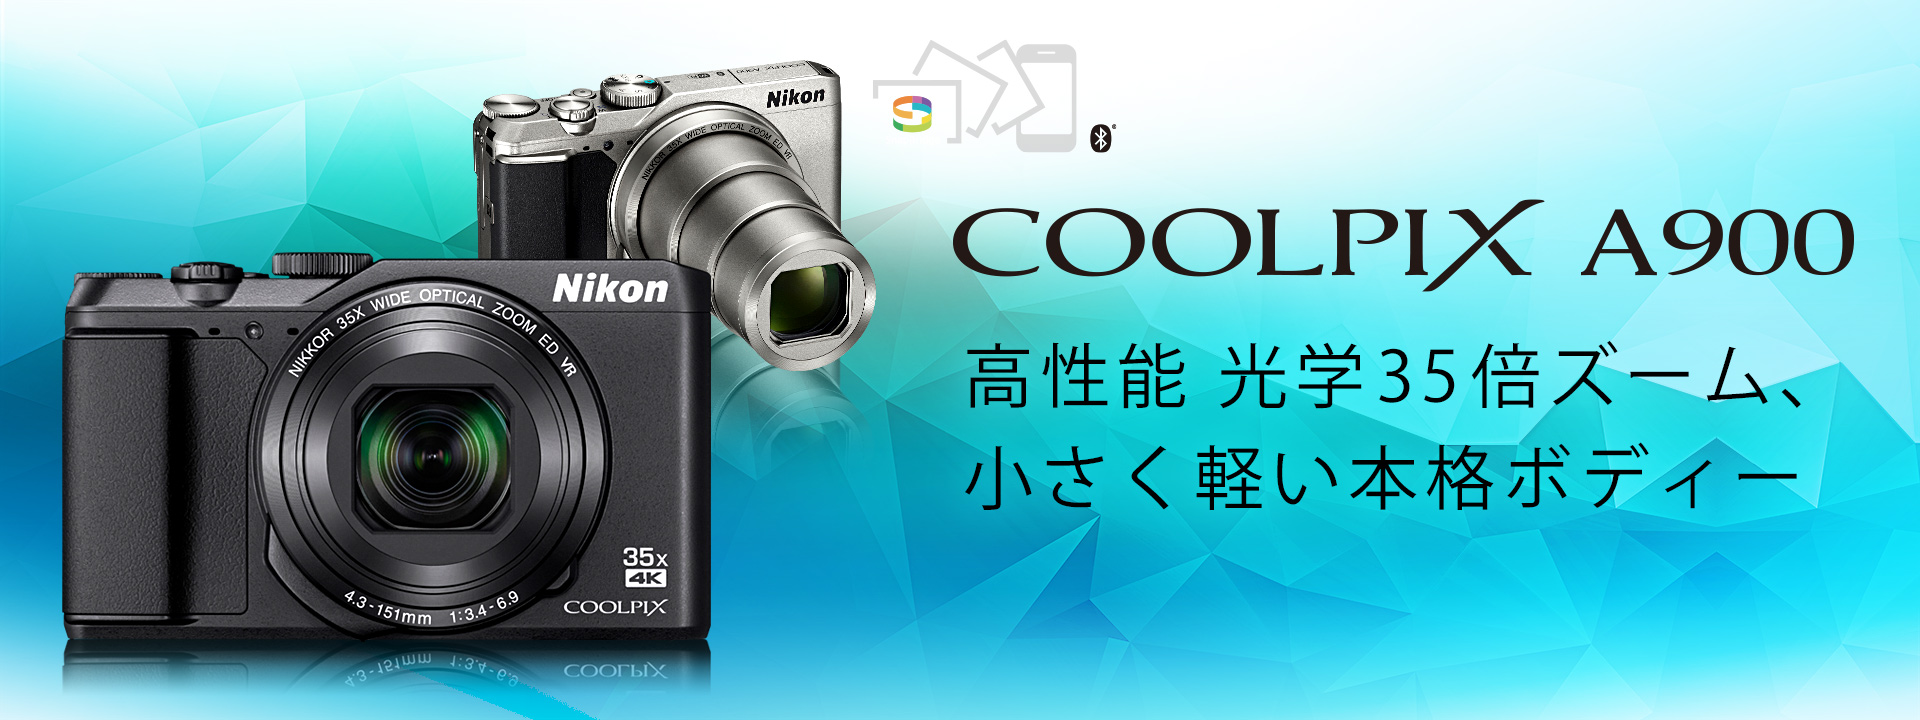 COOLPIX A900 Nikon デジタルカメラ